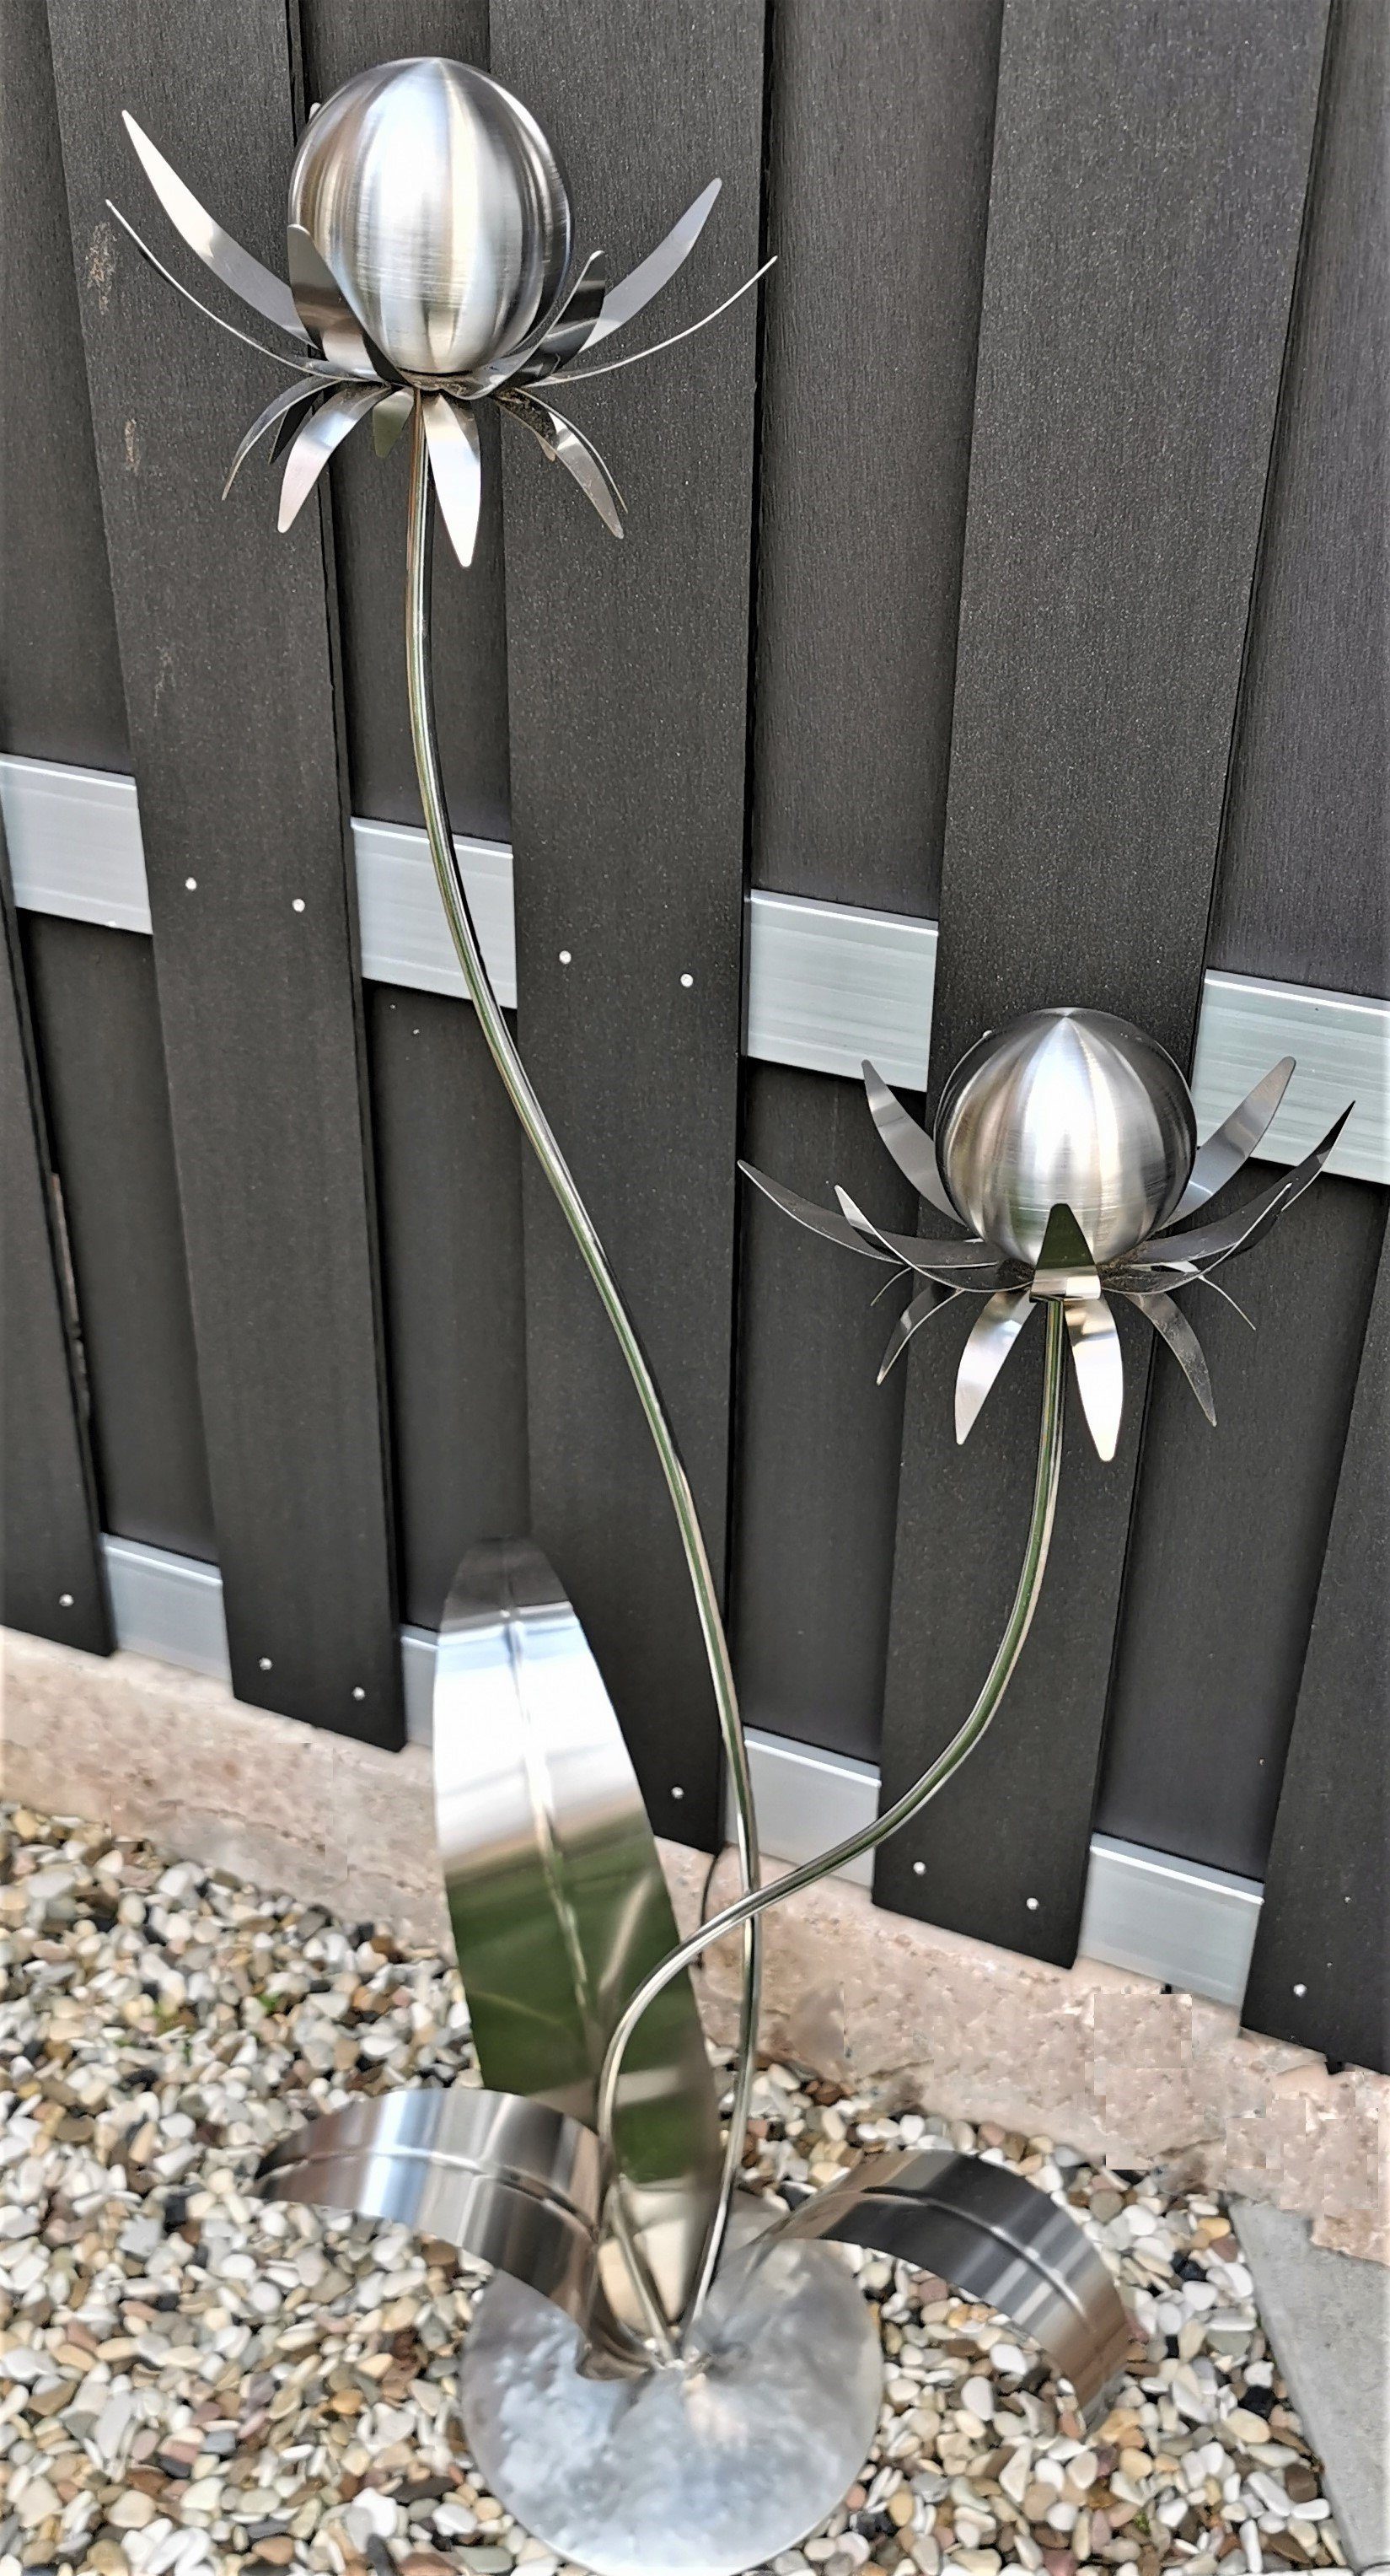 Jürgen Bocker matt gebürstet Milano Edelstahl Blume Gartenstecker Edelstahl 120 cm Kugel Skulptur Deko Garten-Ambiente Standfuß Gartendeko mit